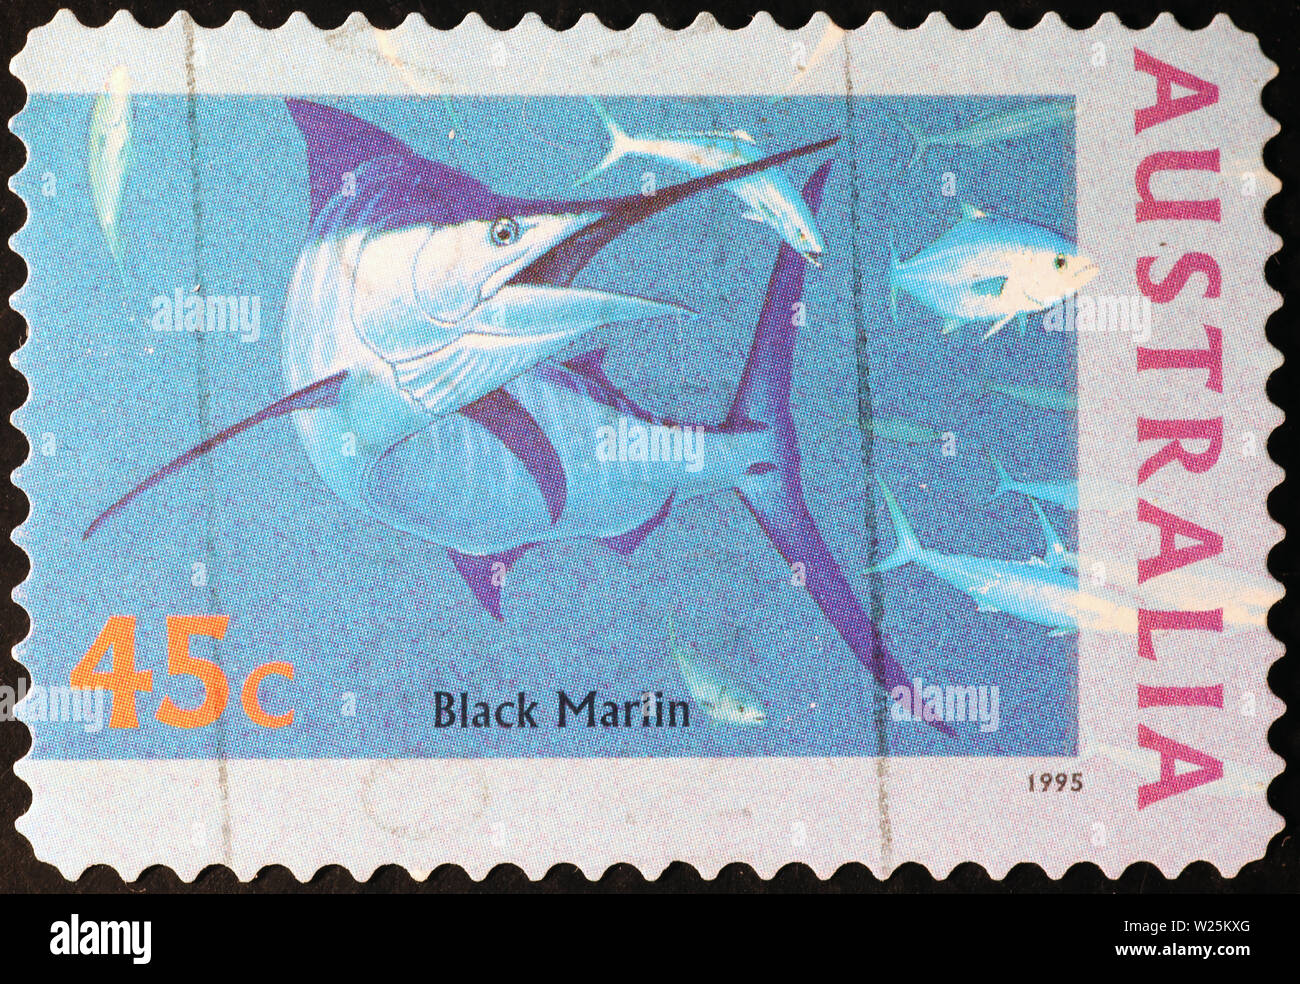 Black marlin on australian postage stamp Stock Photo